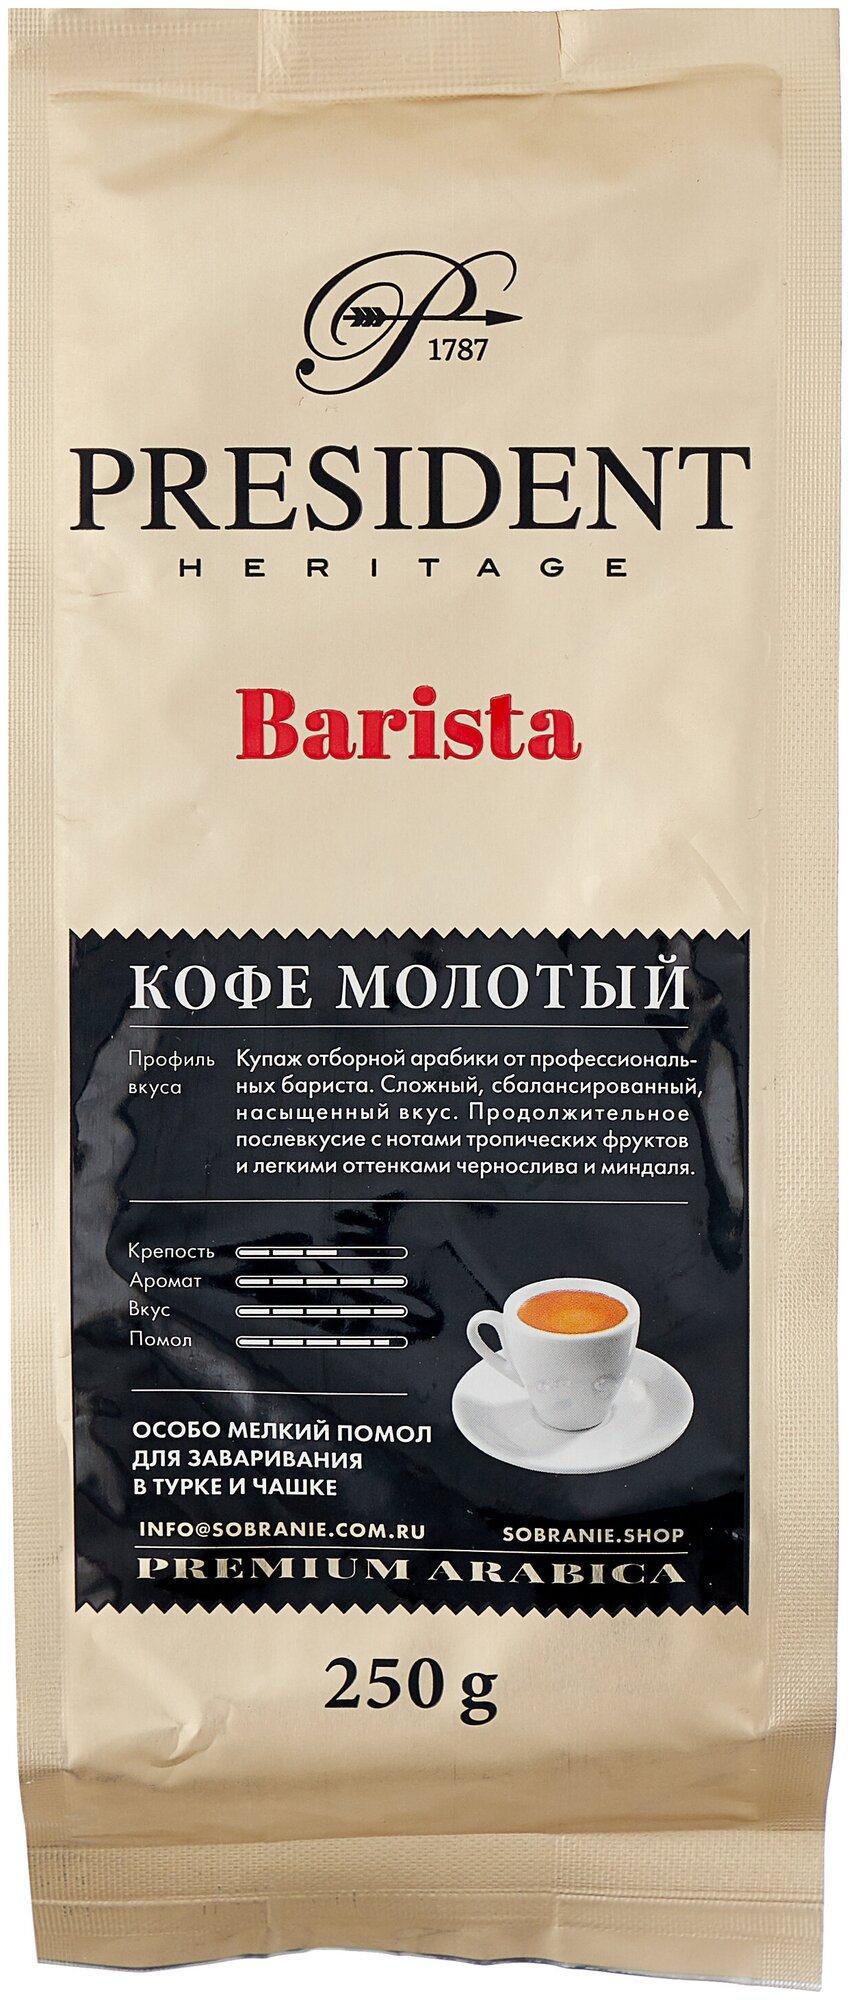 Кофе PRESIDENT HERITAGE Barista дой-пак 250г (мол)